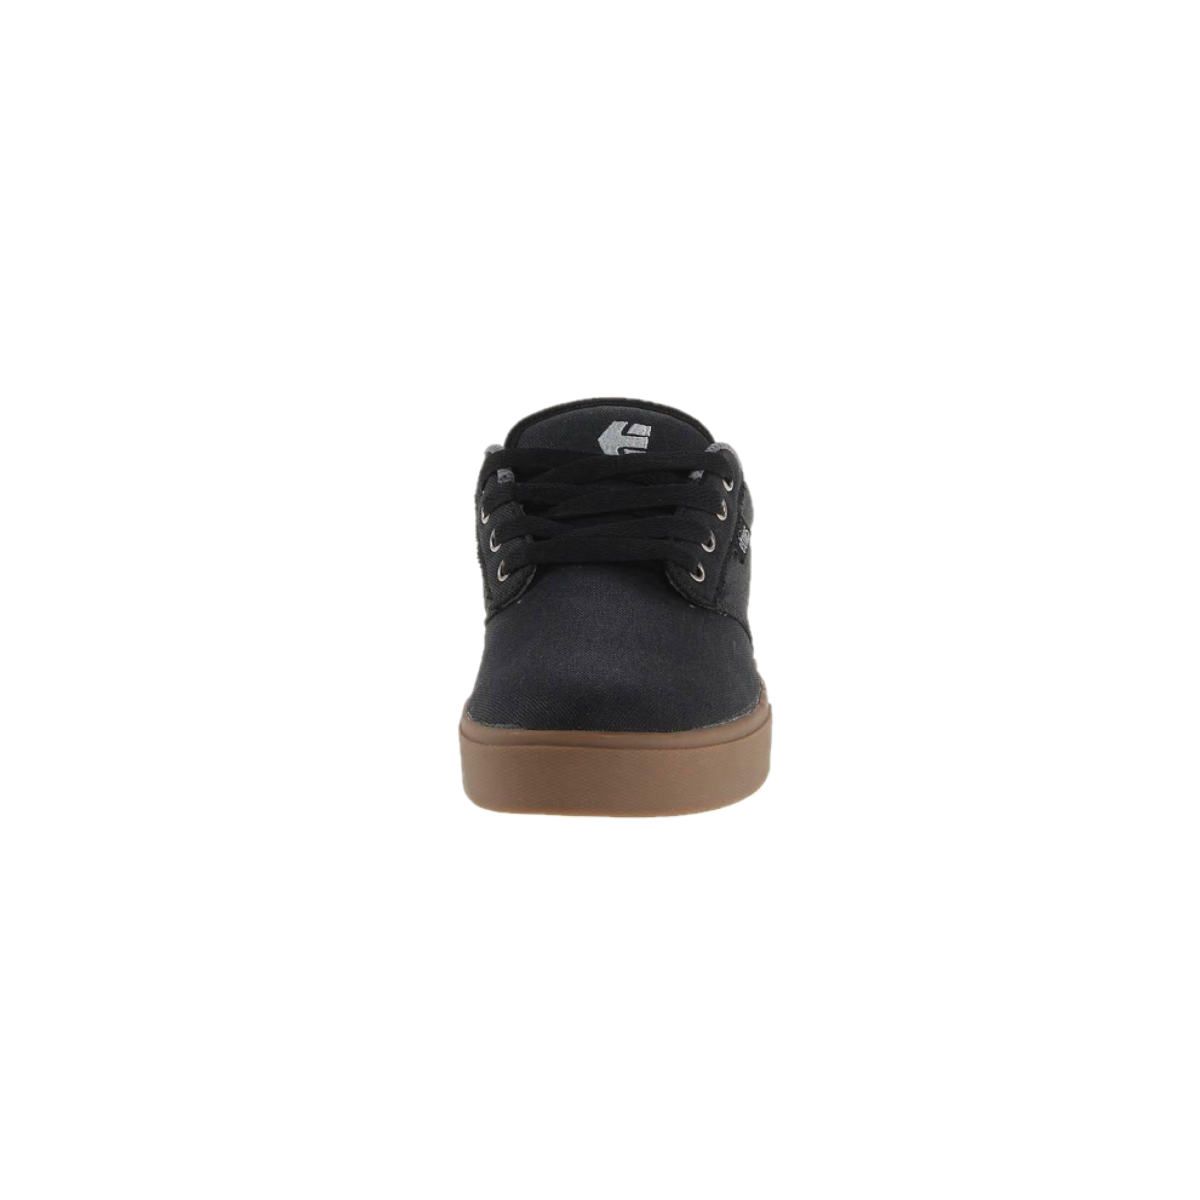 ETNIES 4101000323 968 JAMESON 2 ECO MN'S (Medium) Black/Gum/White Canvas Skate Shoes